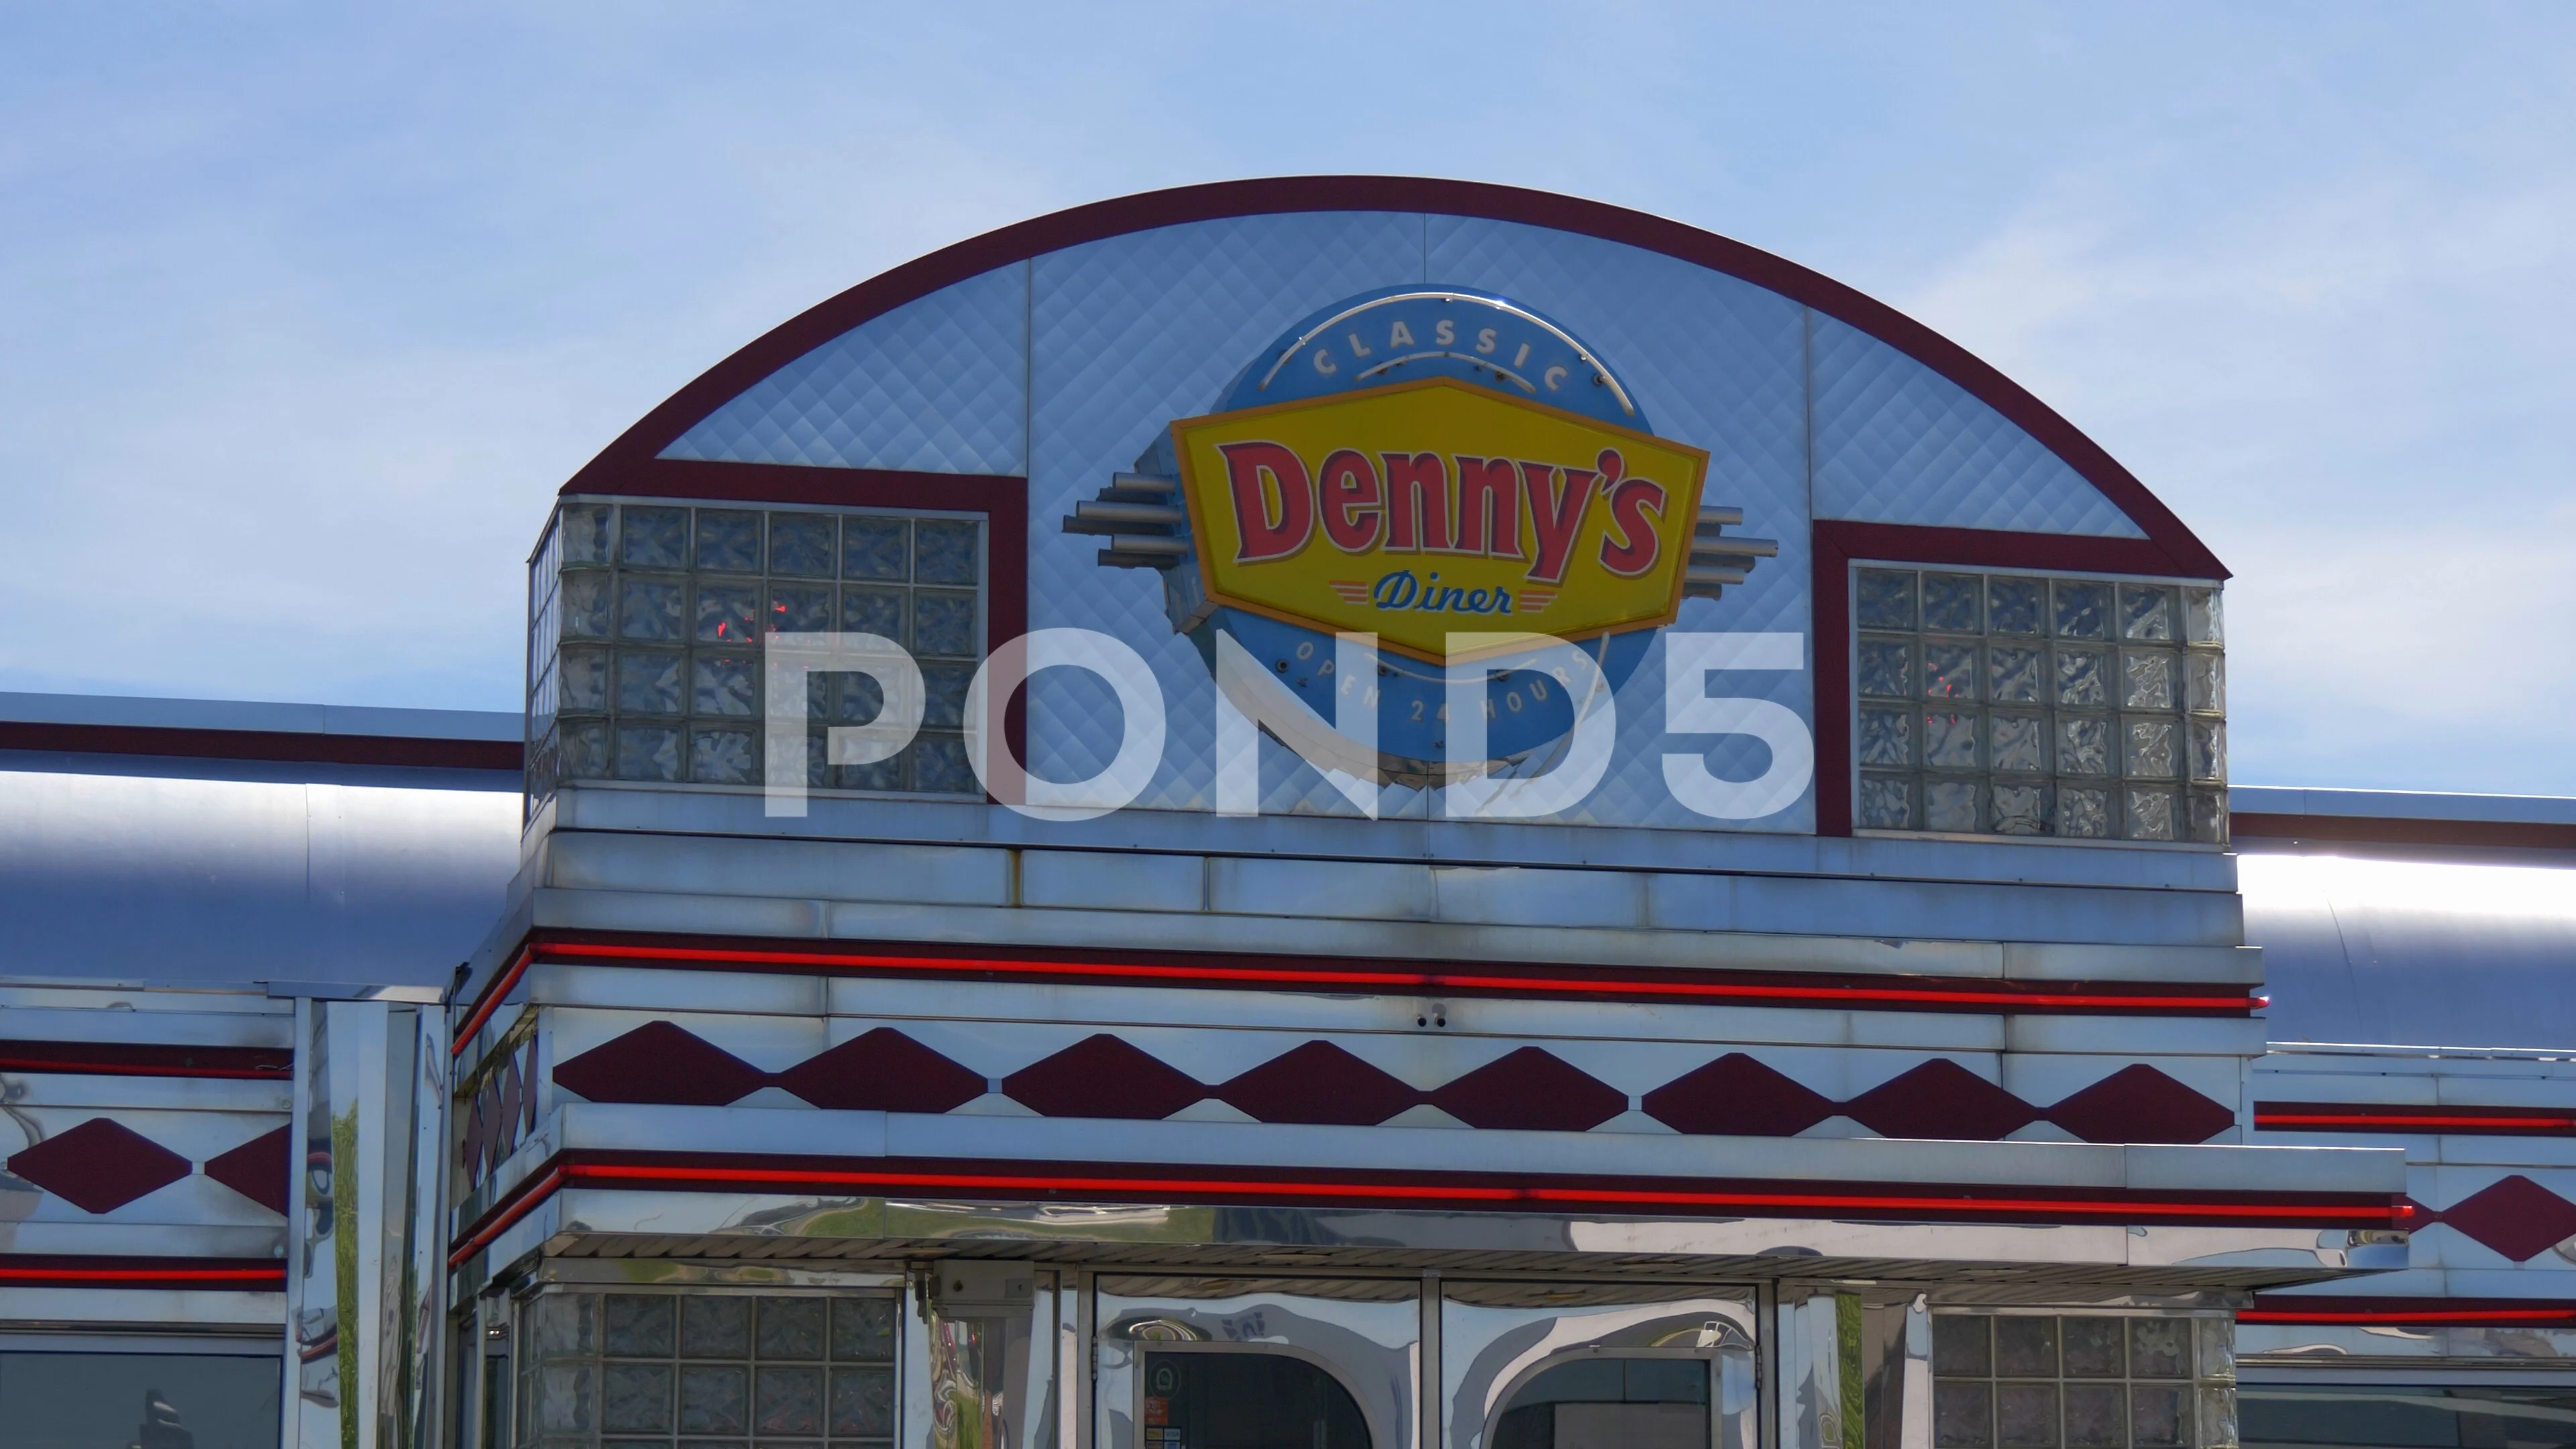 Denny's Classic Diner